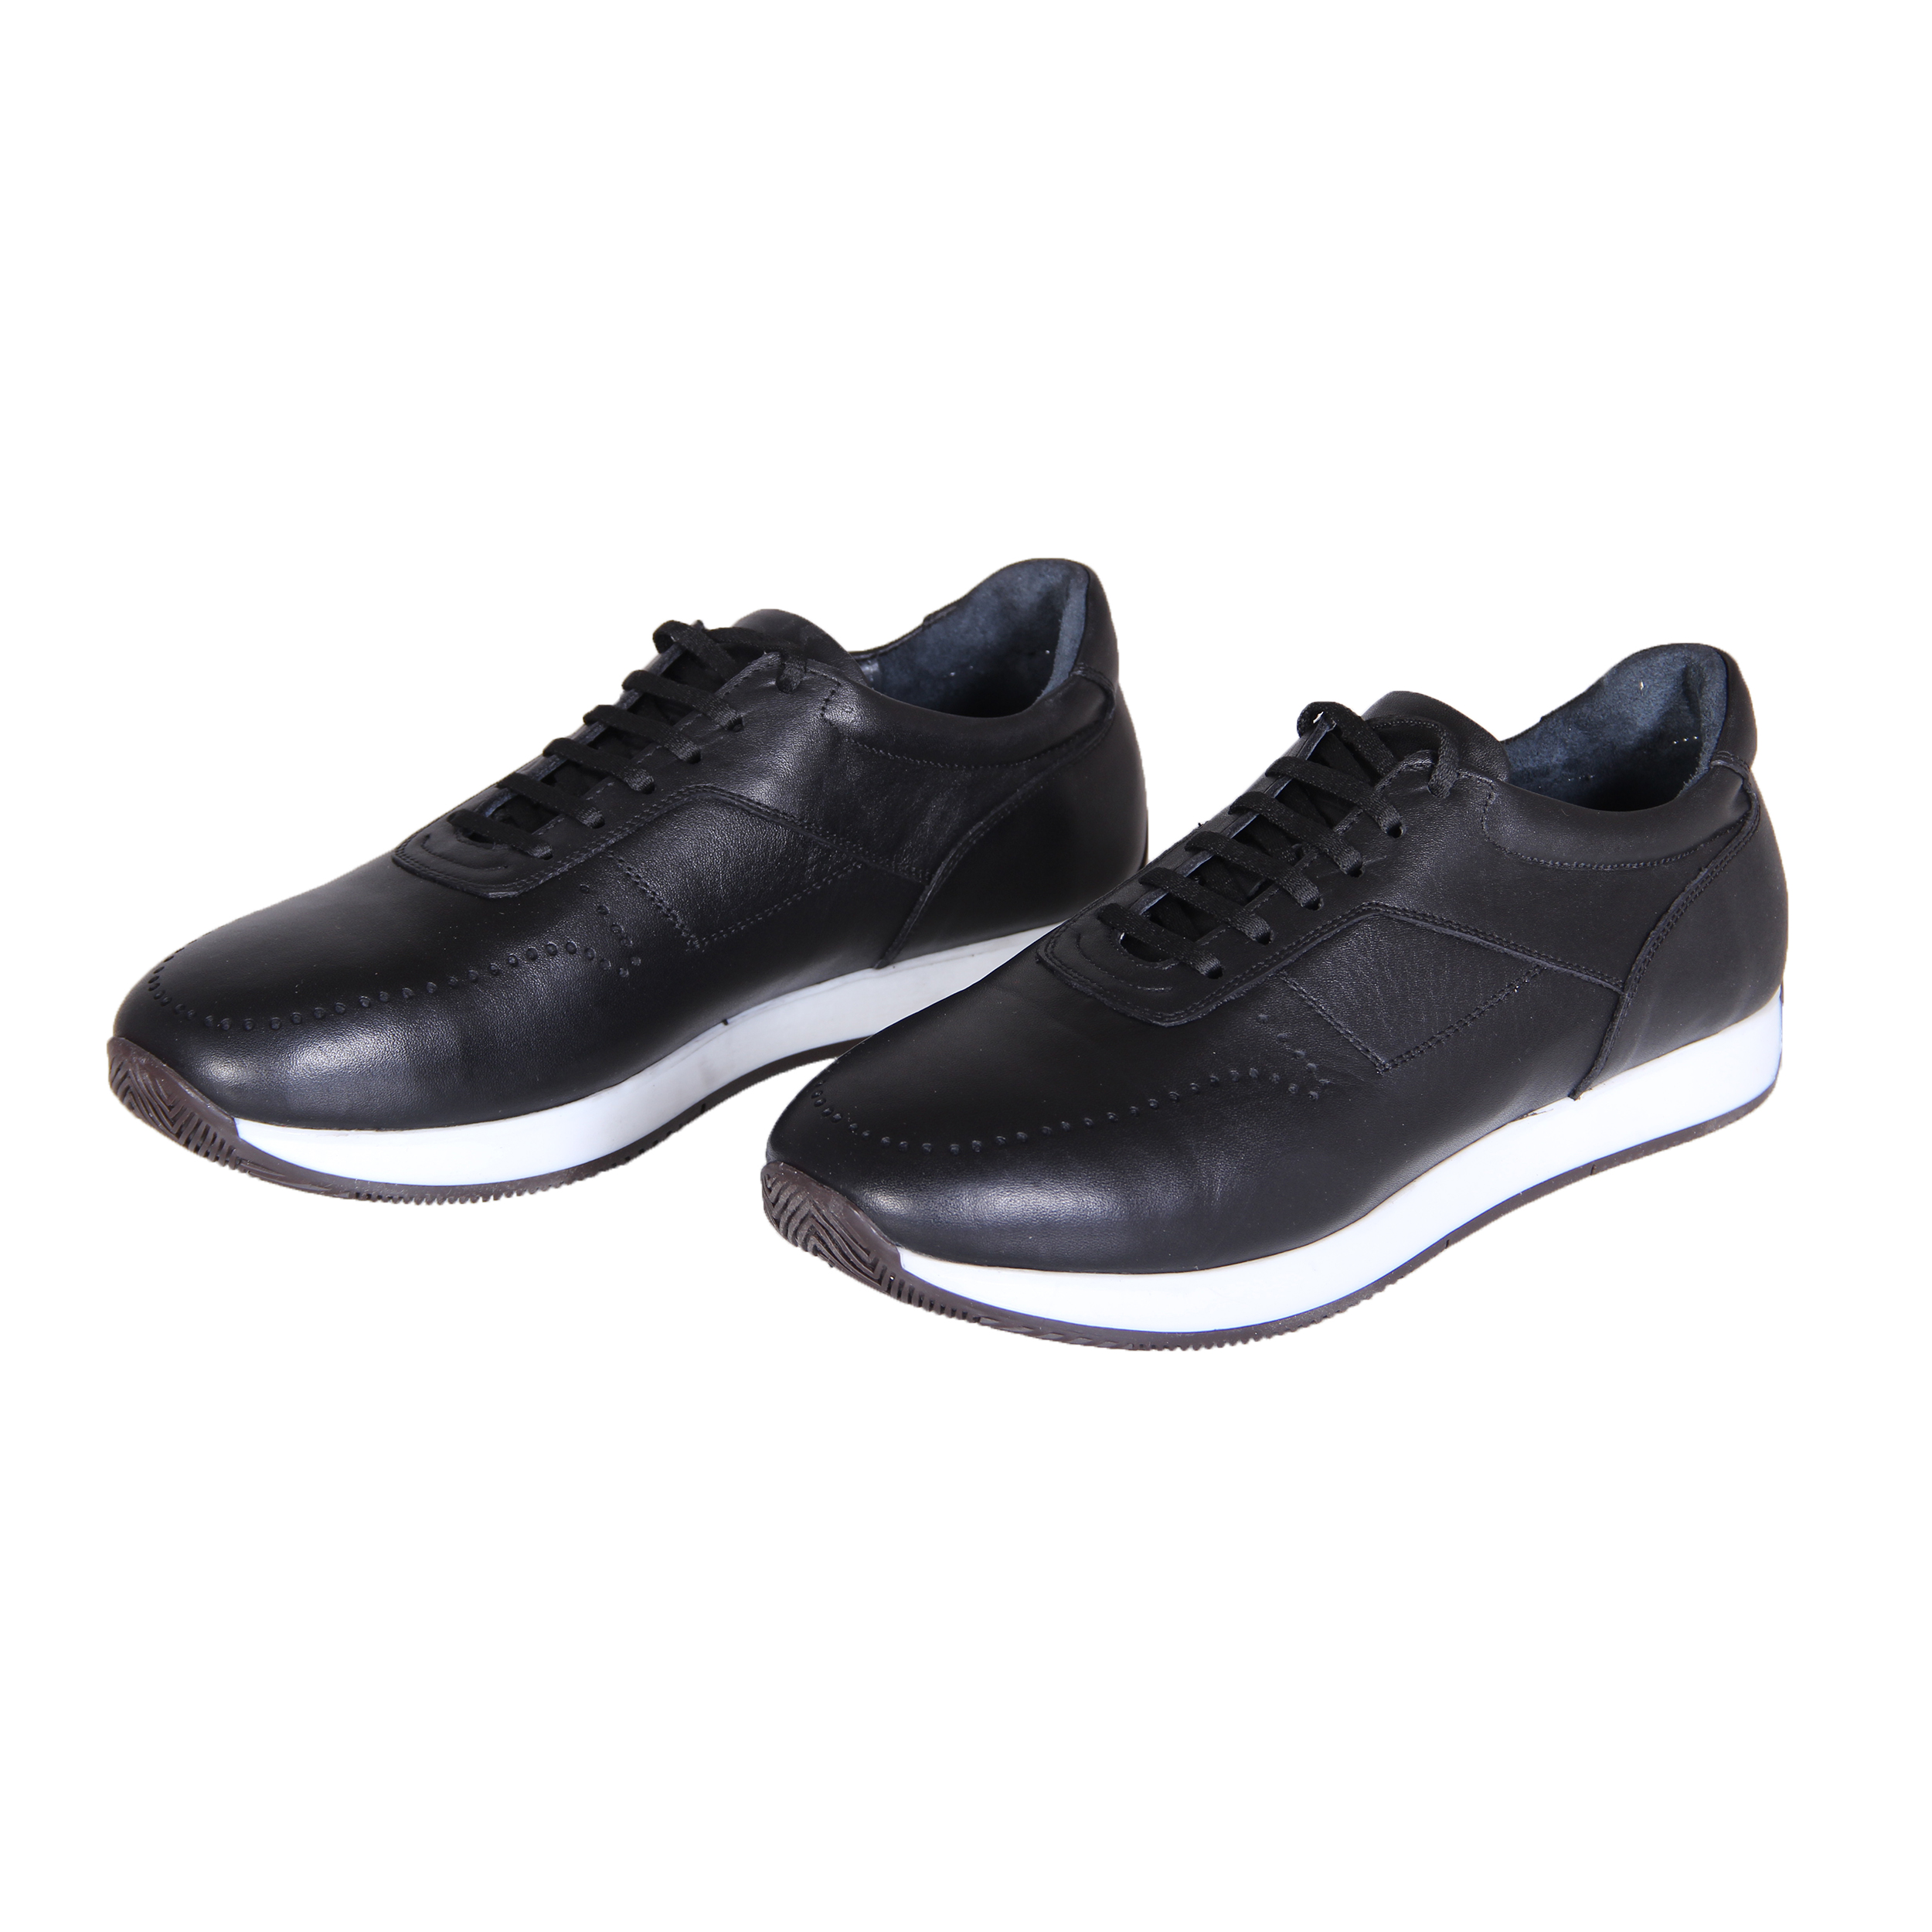 SHAHRECHARM leather men's casual shoes , 1-GH5003 Model 